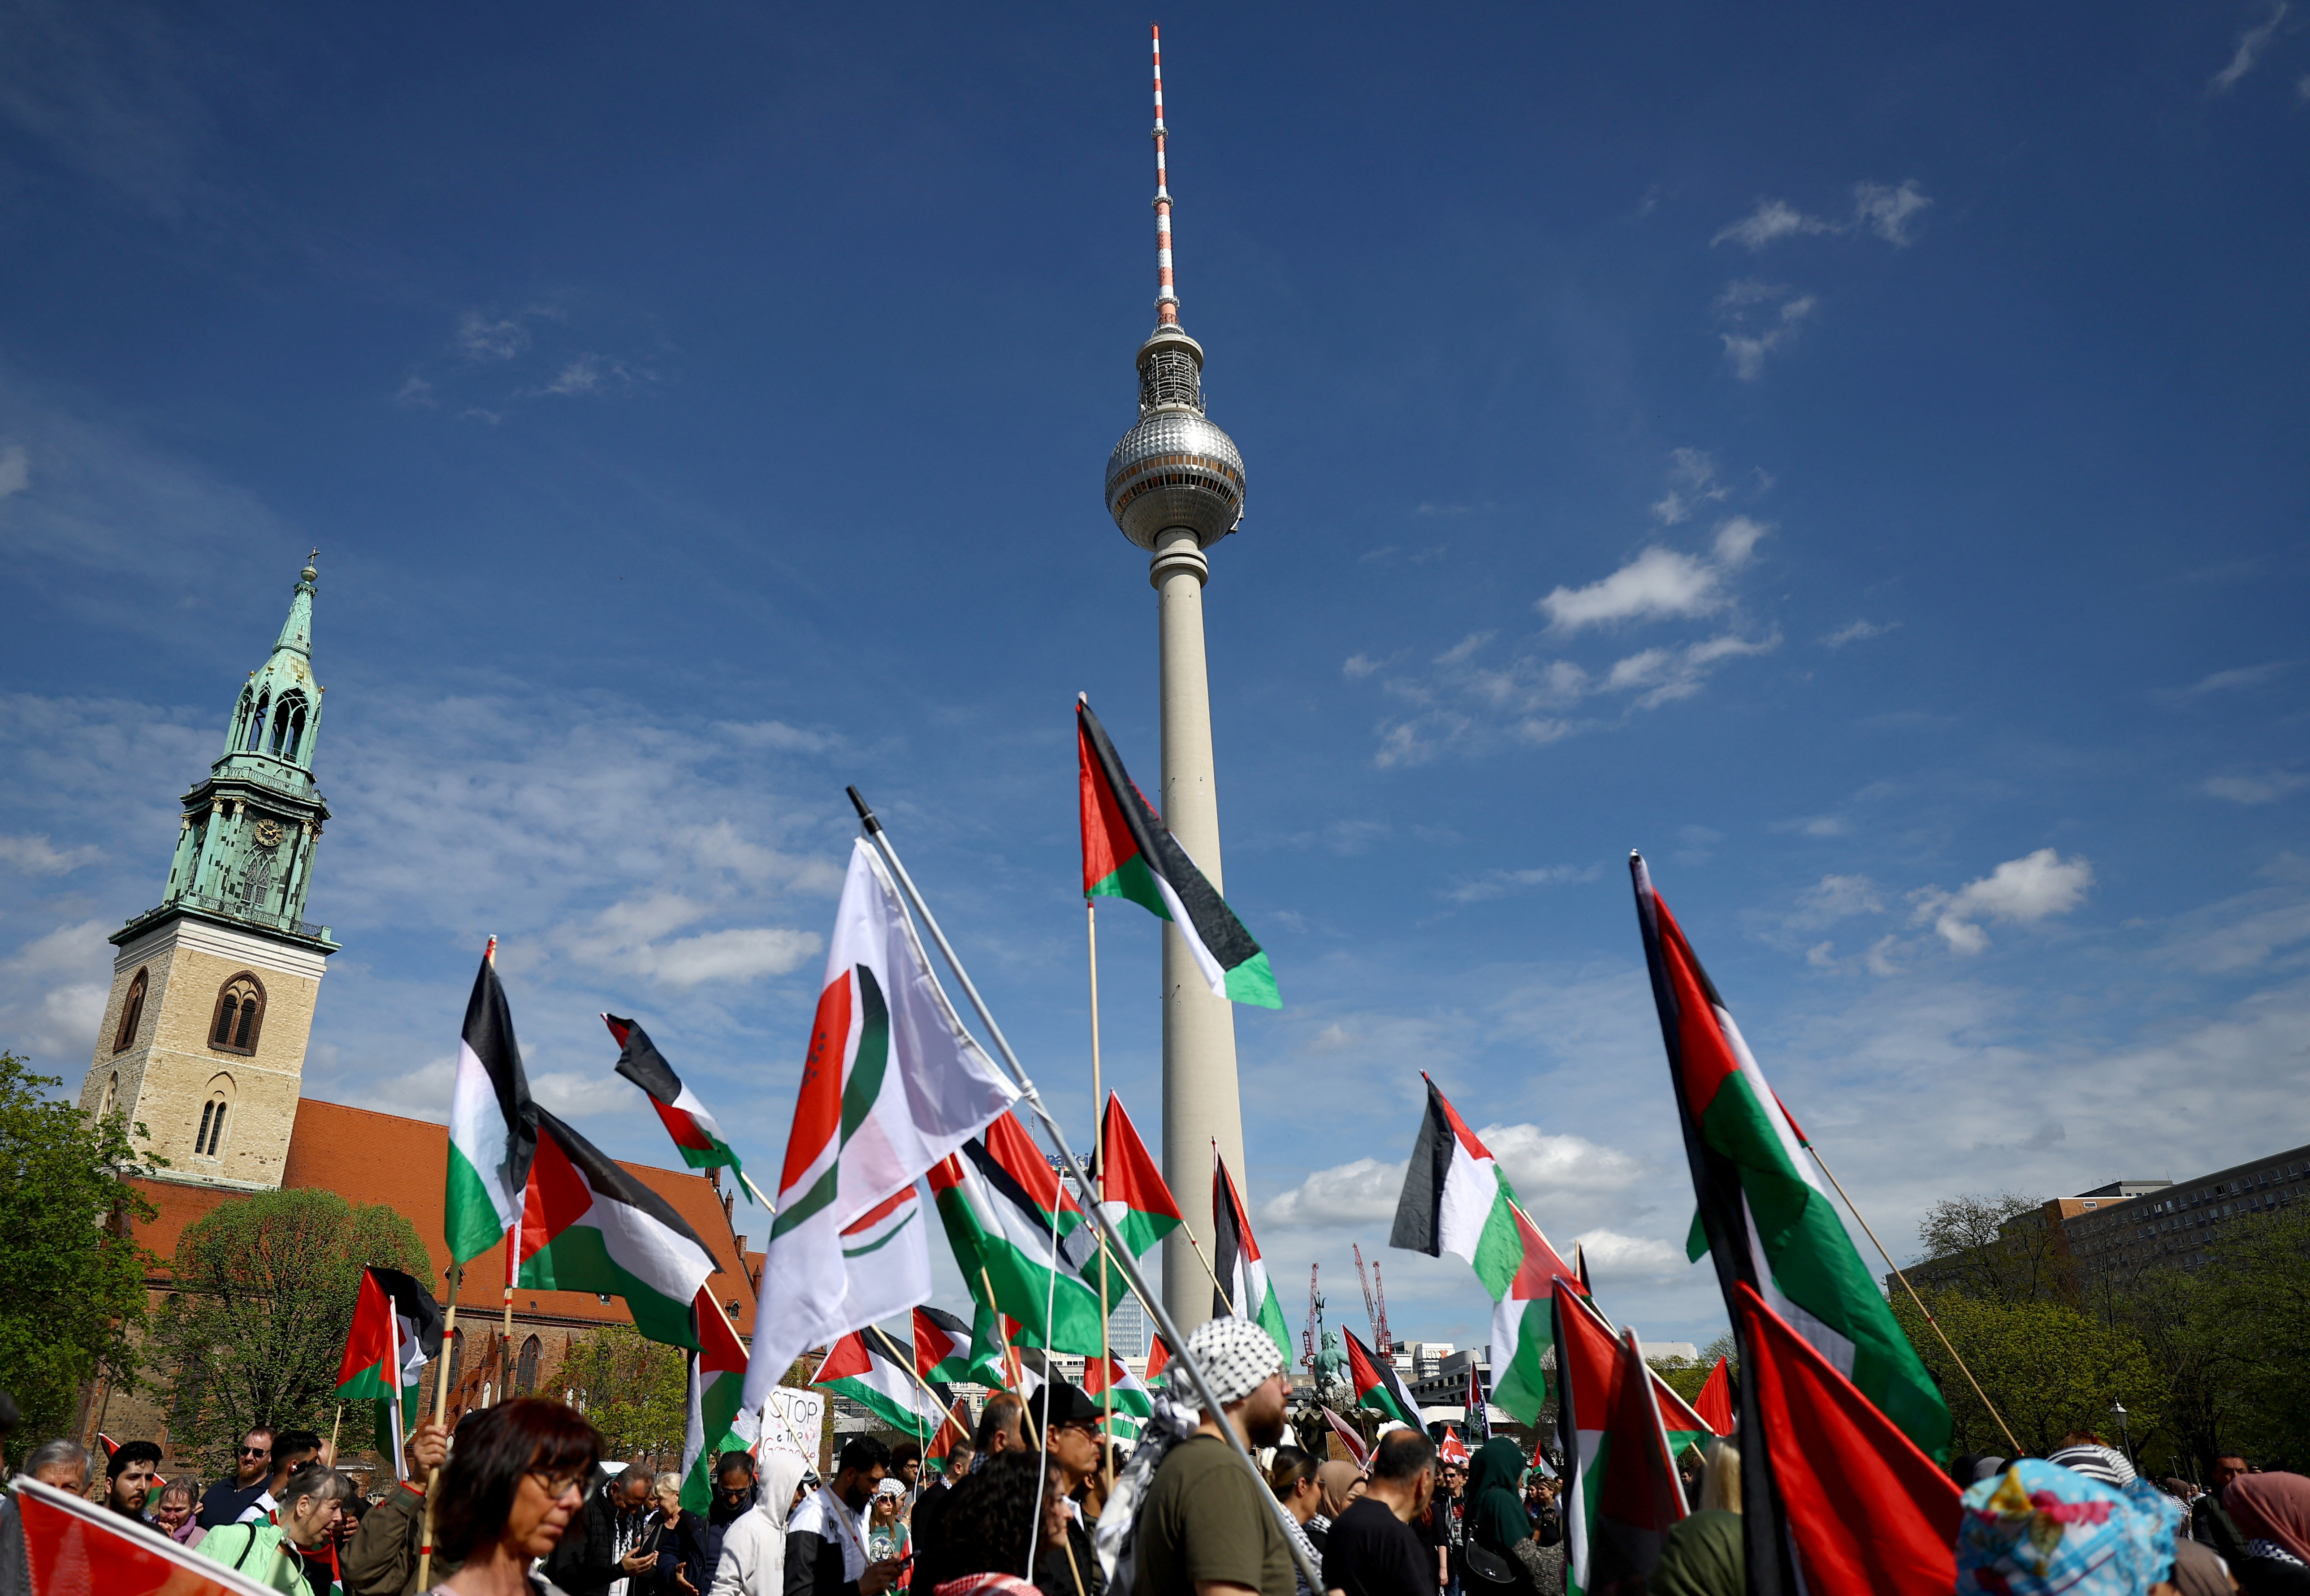 Pro-Palestinian protest in Berlin